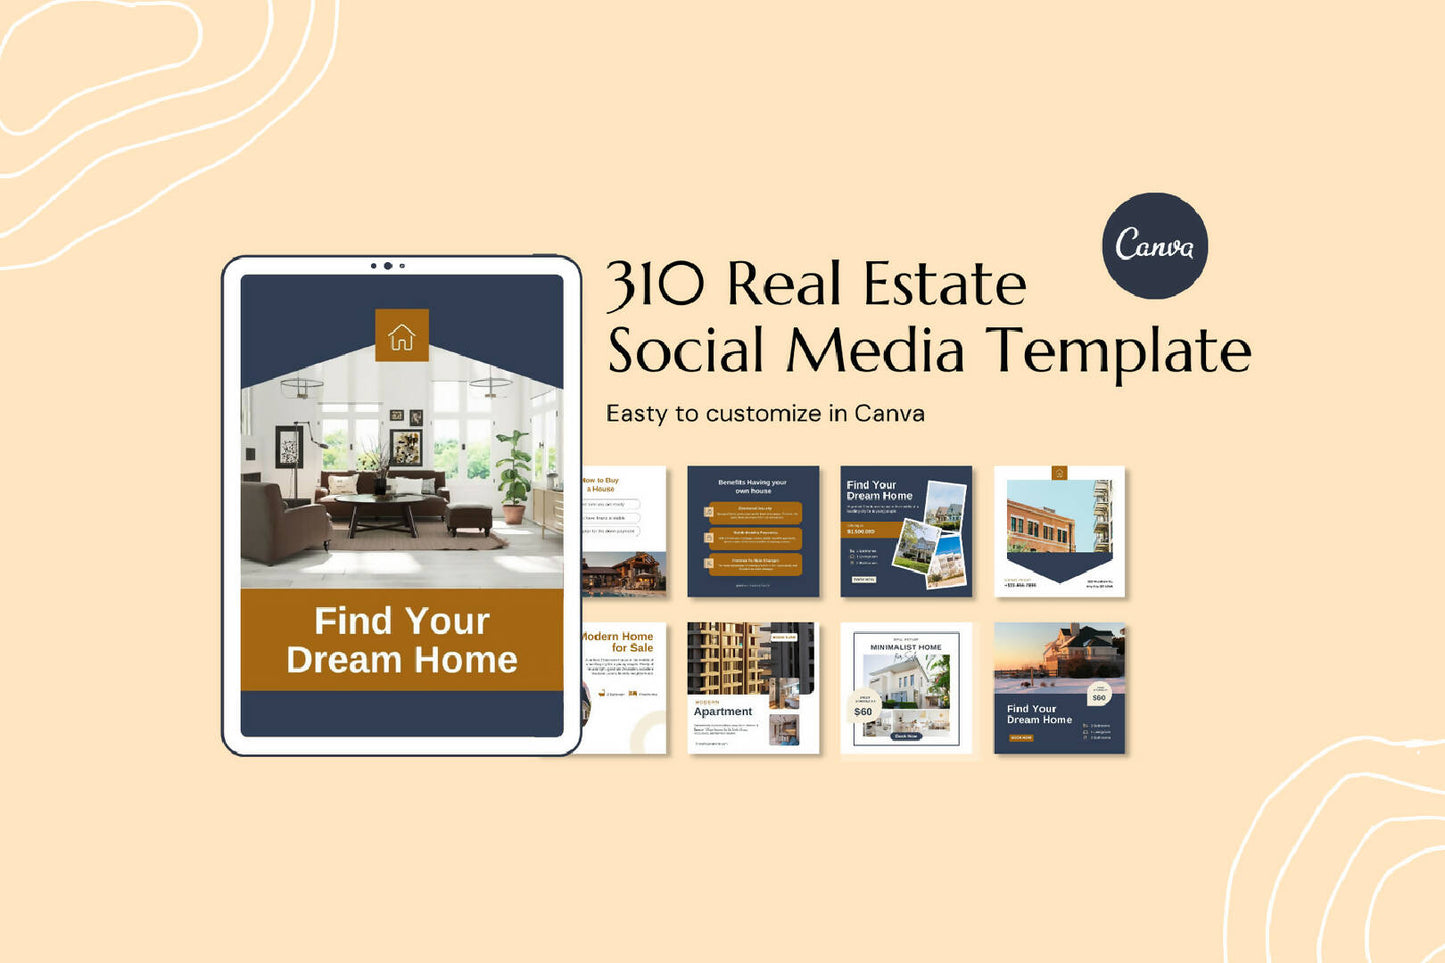 310 Real Estate Bundle For Social Media Template